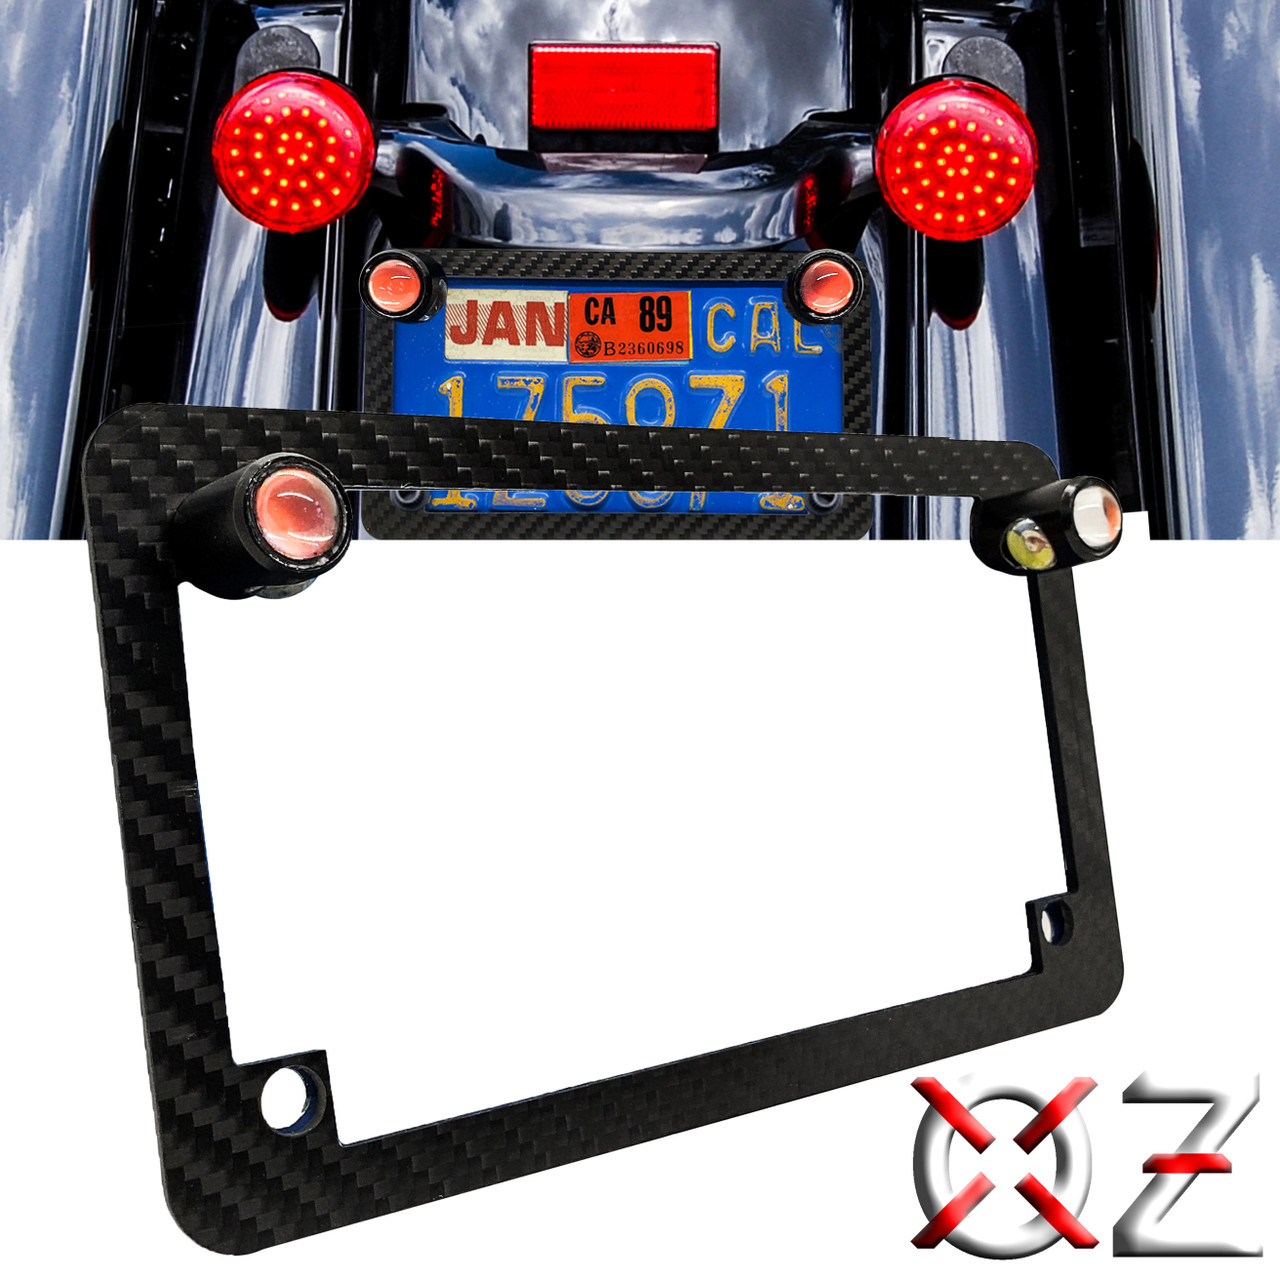 Carbon Fiber License Plate Frame with Dual White LED Tag Lights & Red LED  Brake Lights for Motorcycle